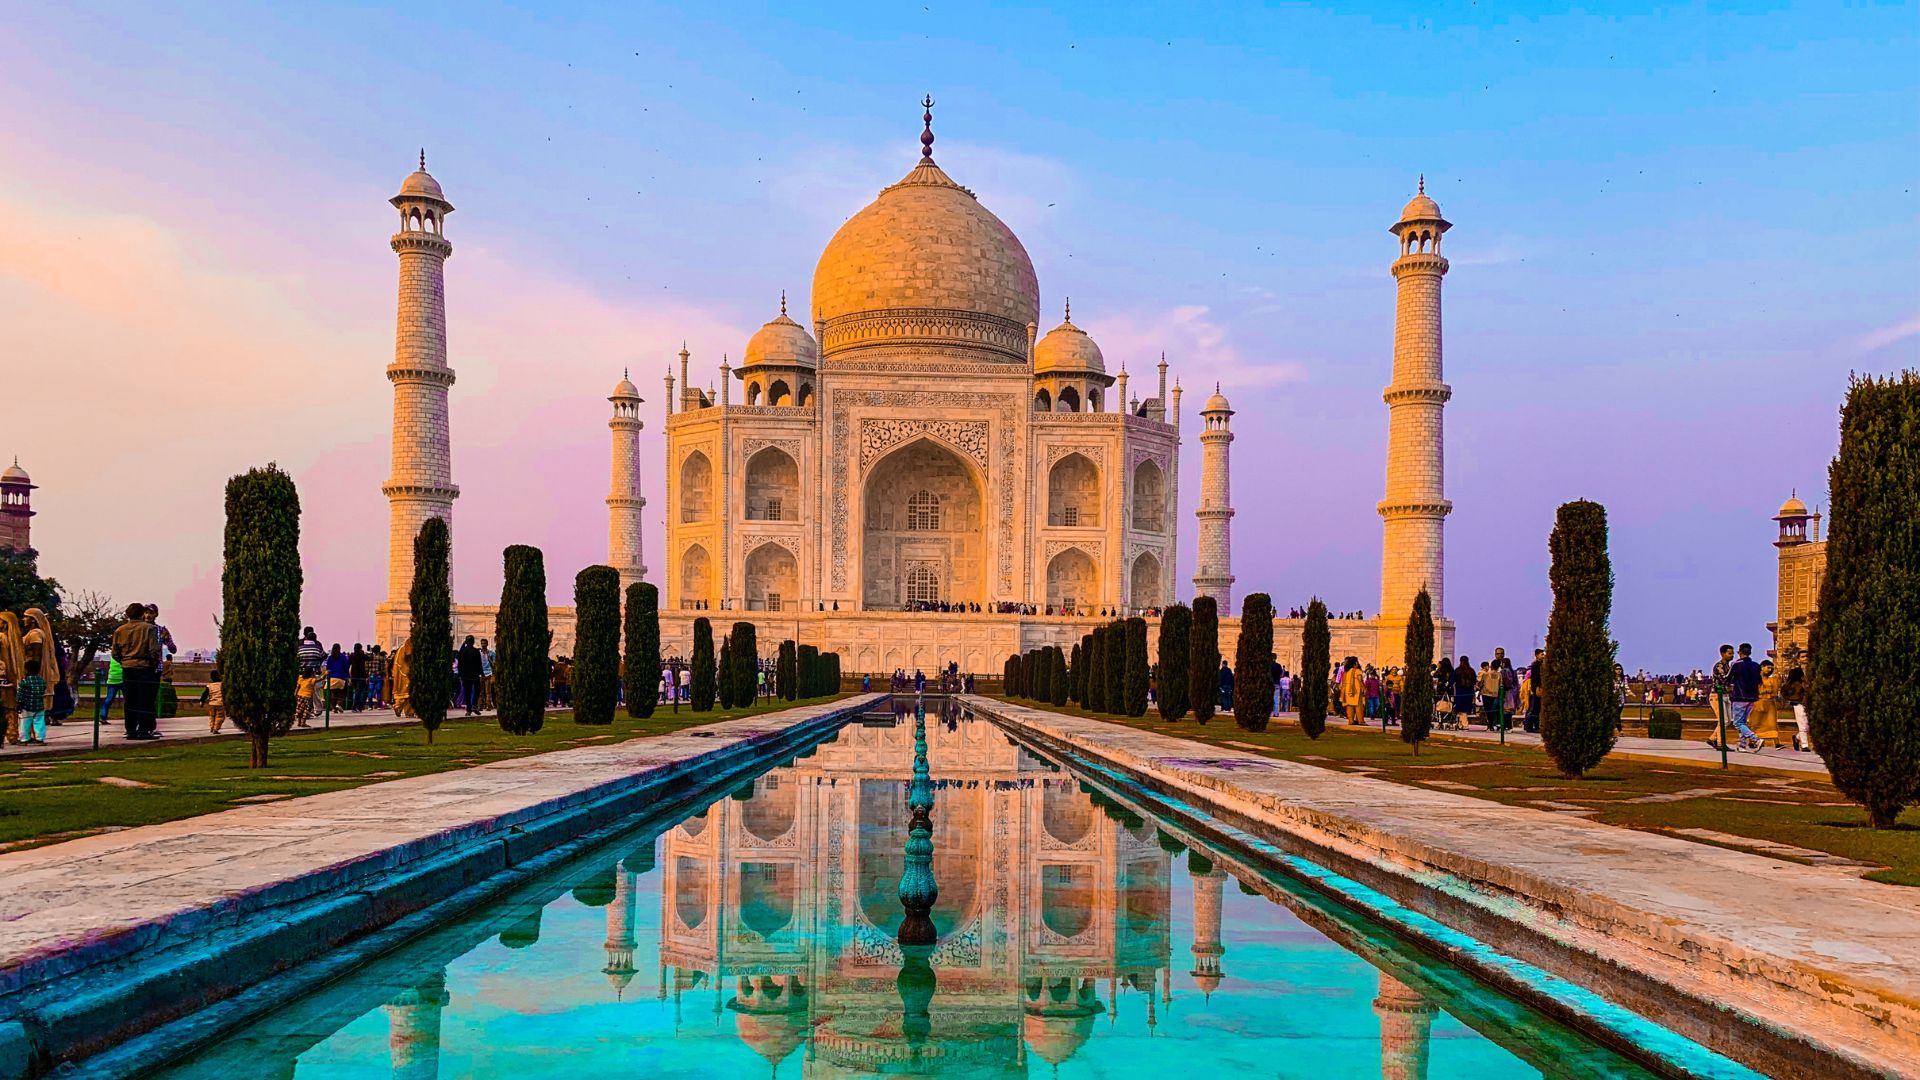 Visit the Taj Mahal: